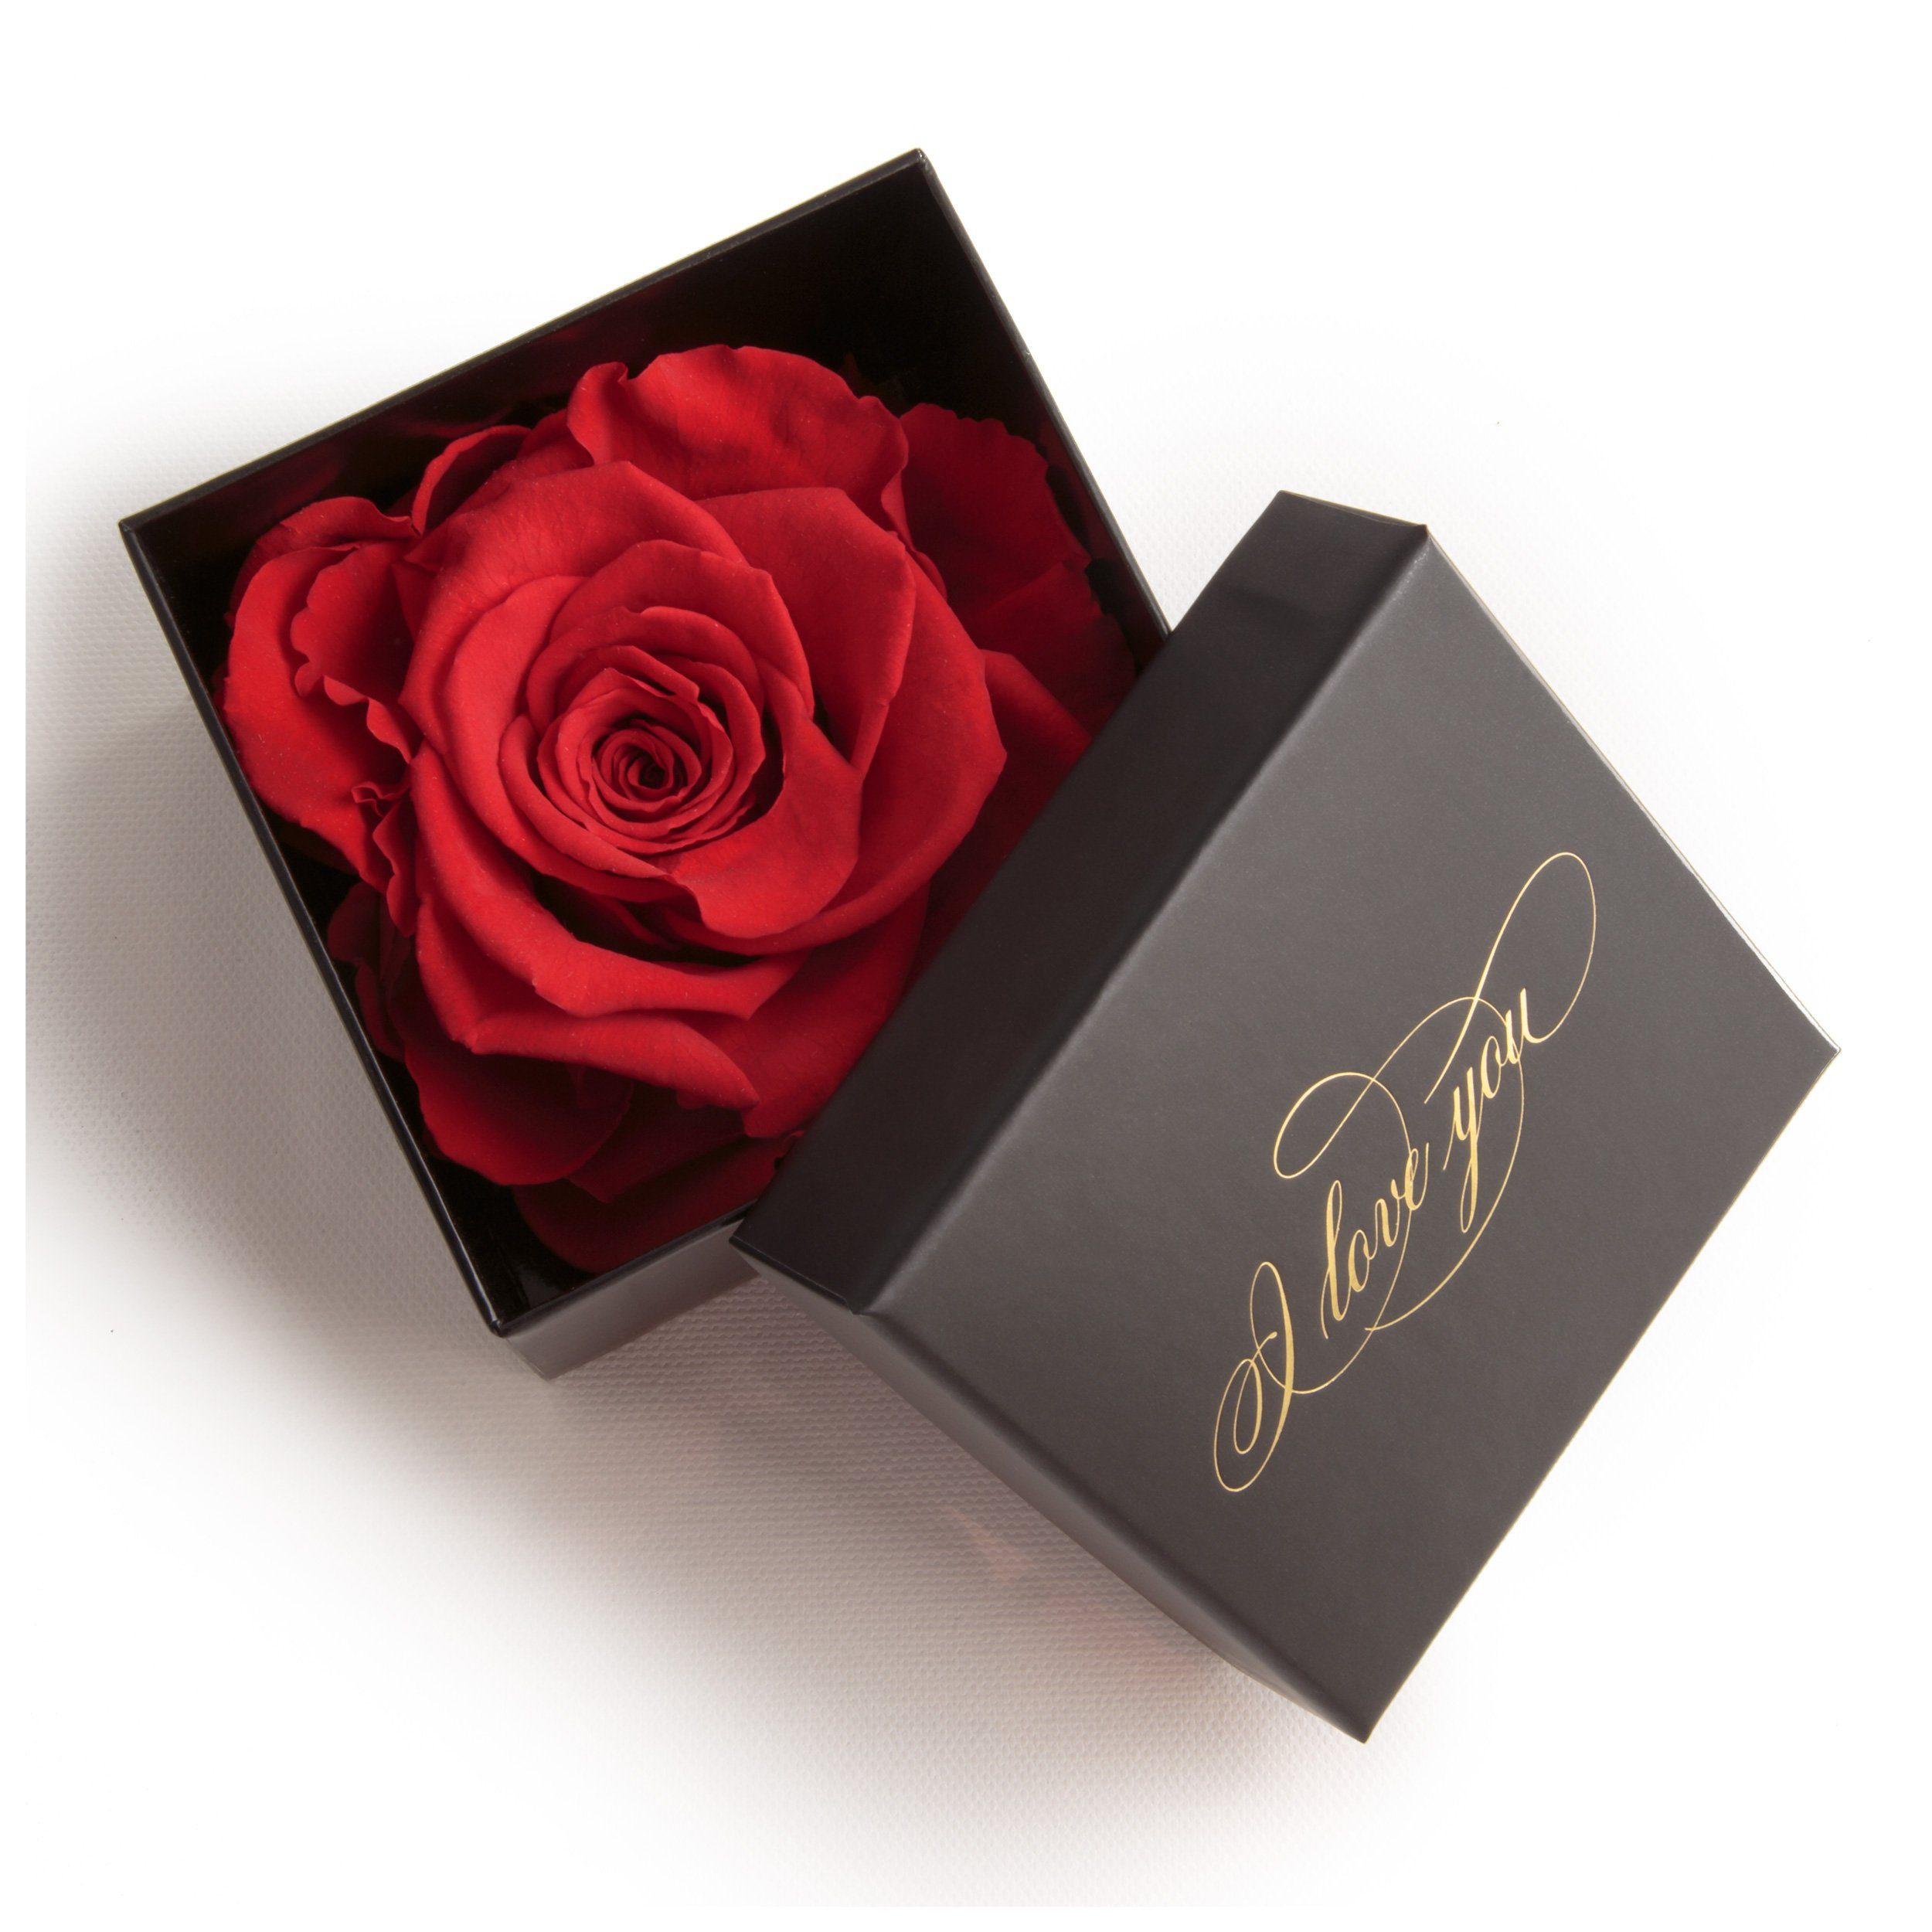 Kunstblume Infinity Rose Box I Love You Geschenk Idee Liebesbeweis Rose, ROSEMARIE SCHULZ Heidelberg, Höhe 6 cm, Echte Rose konserviert Rot